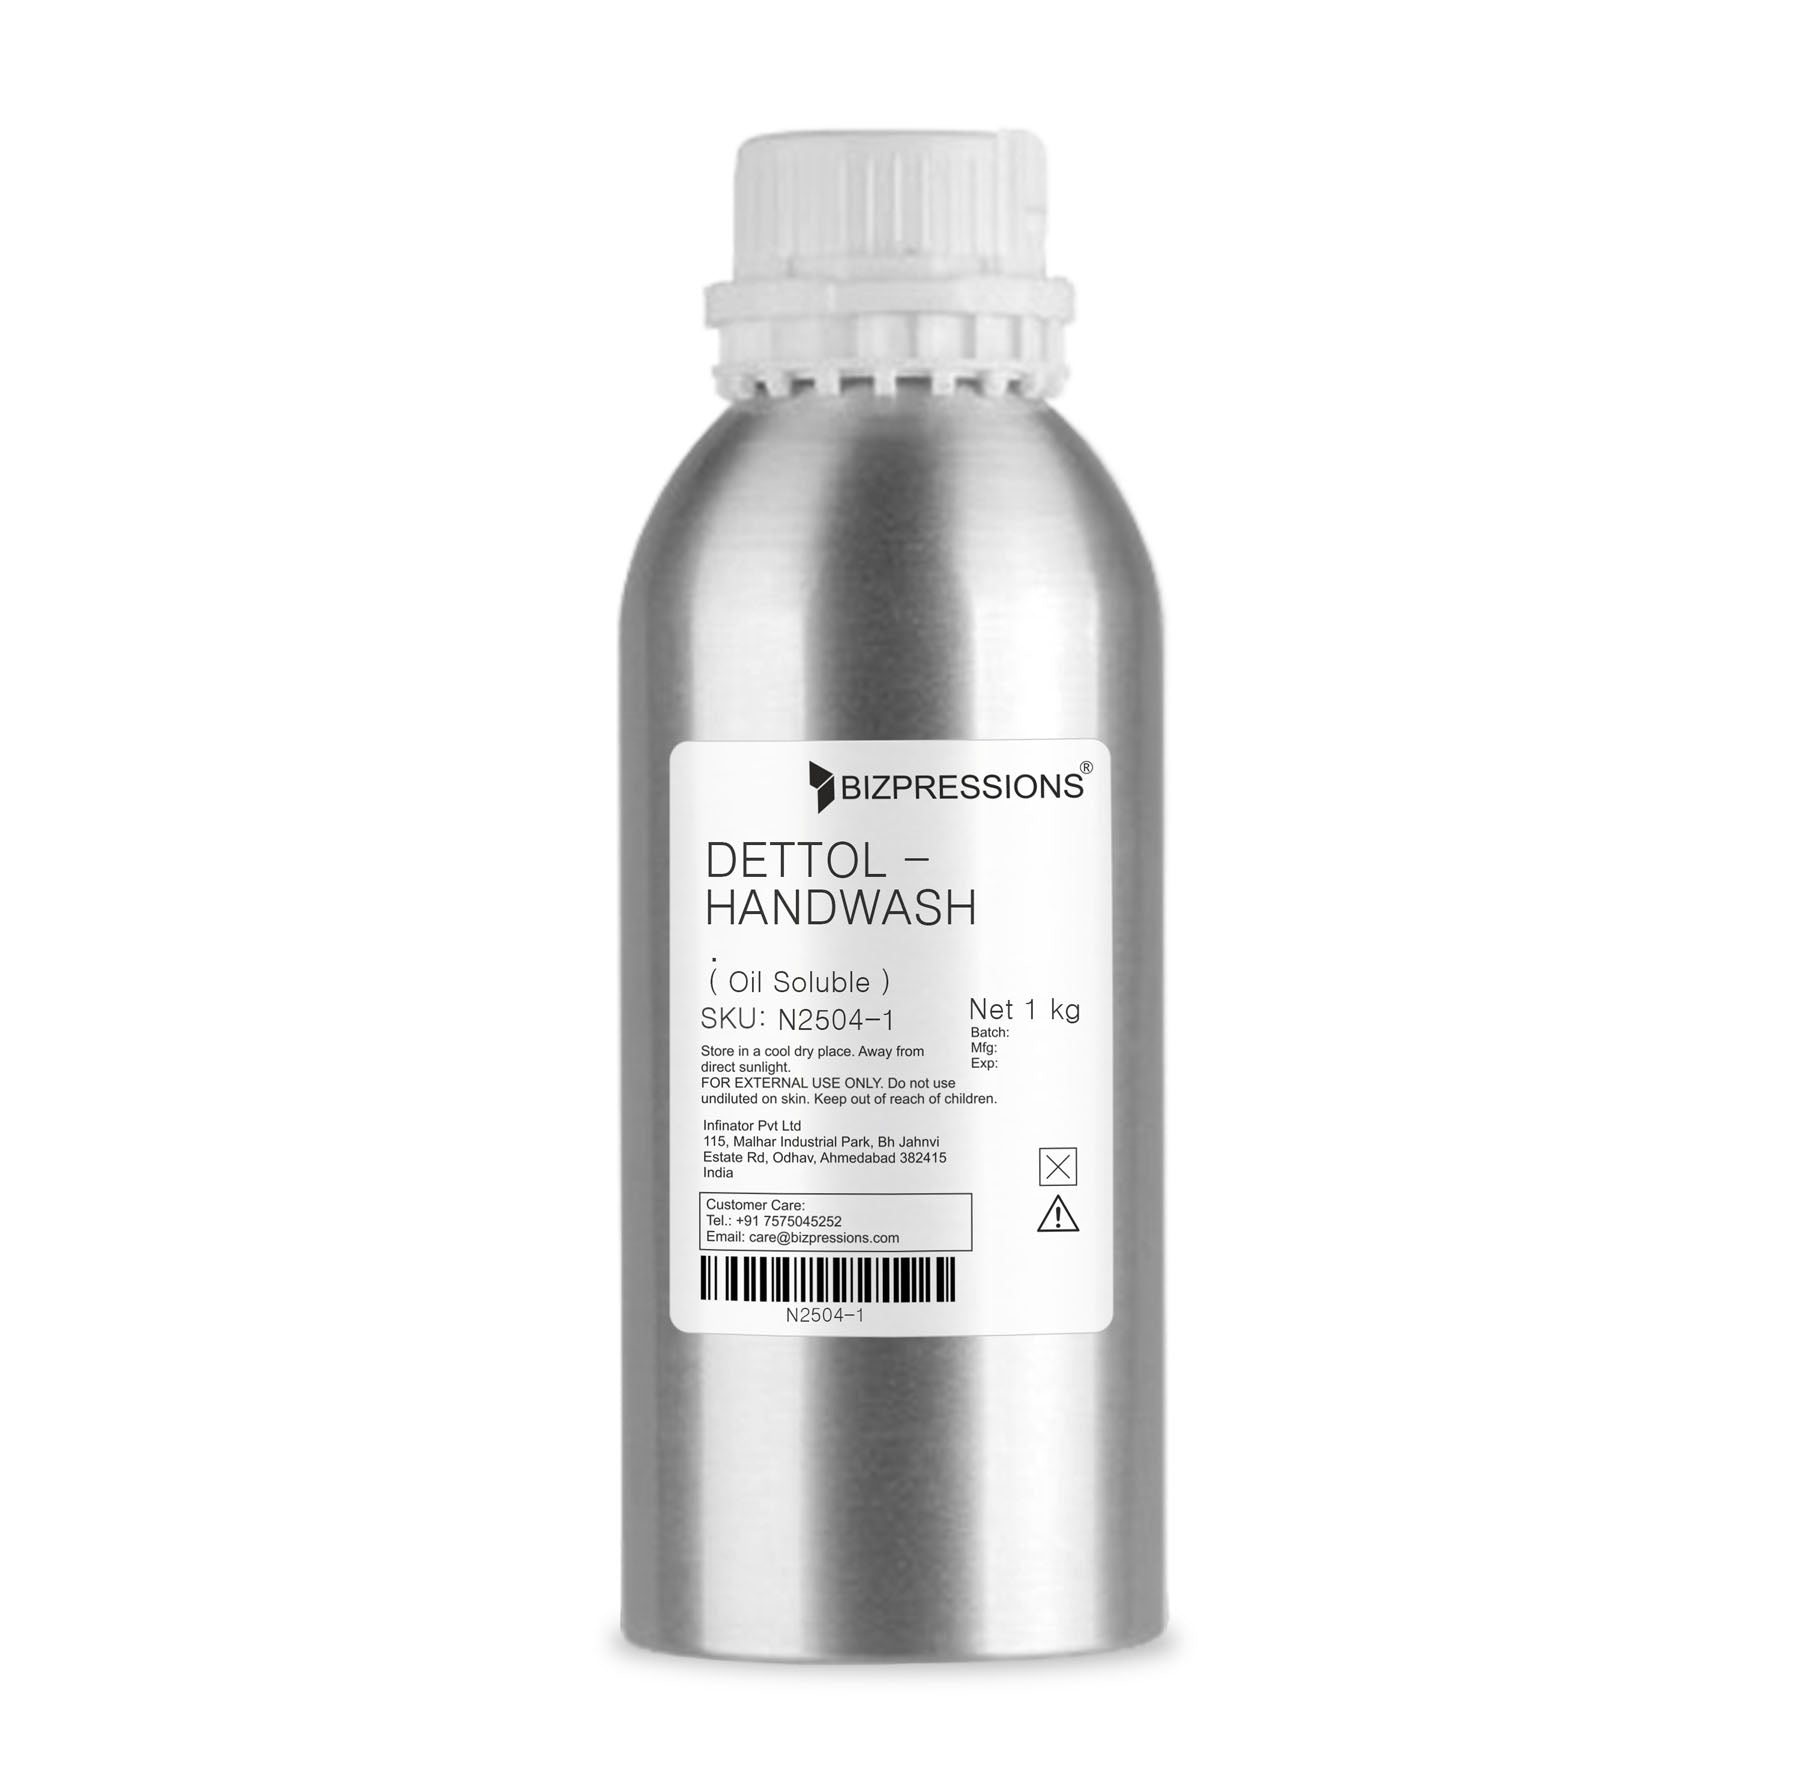 DETTOL - HANDWASH - Fragrance ( Oil Soluble ) - 1 kg